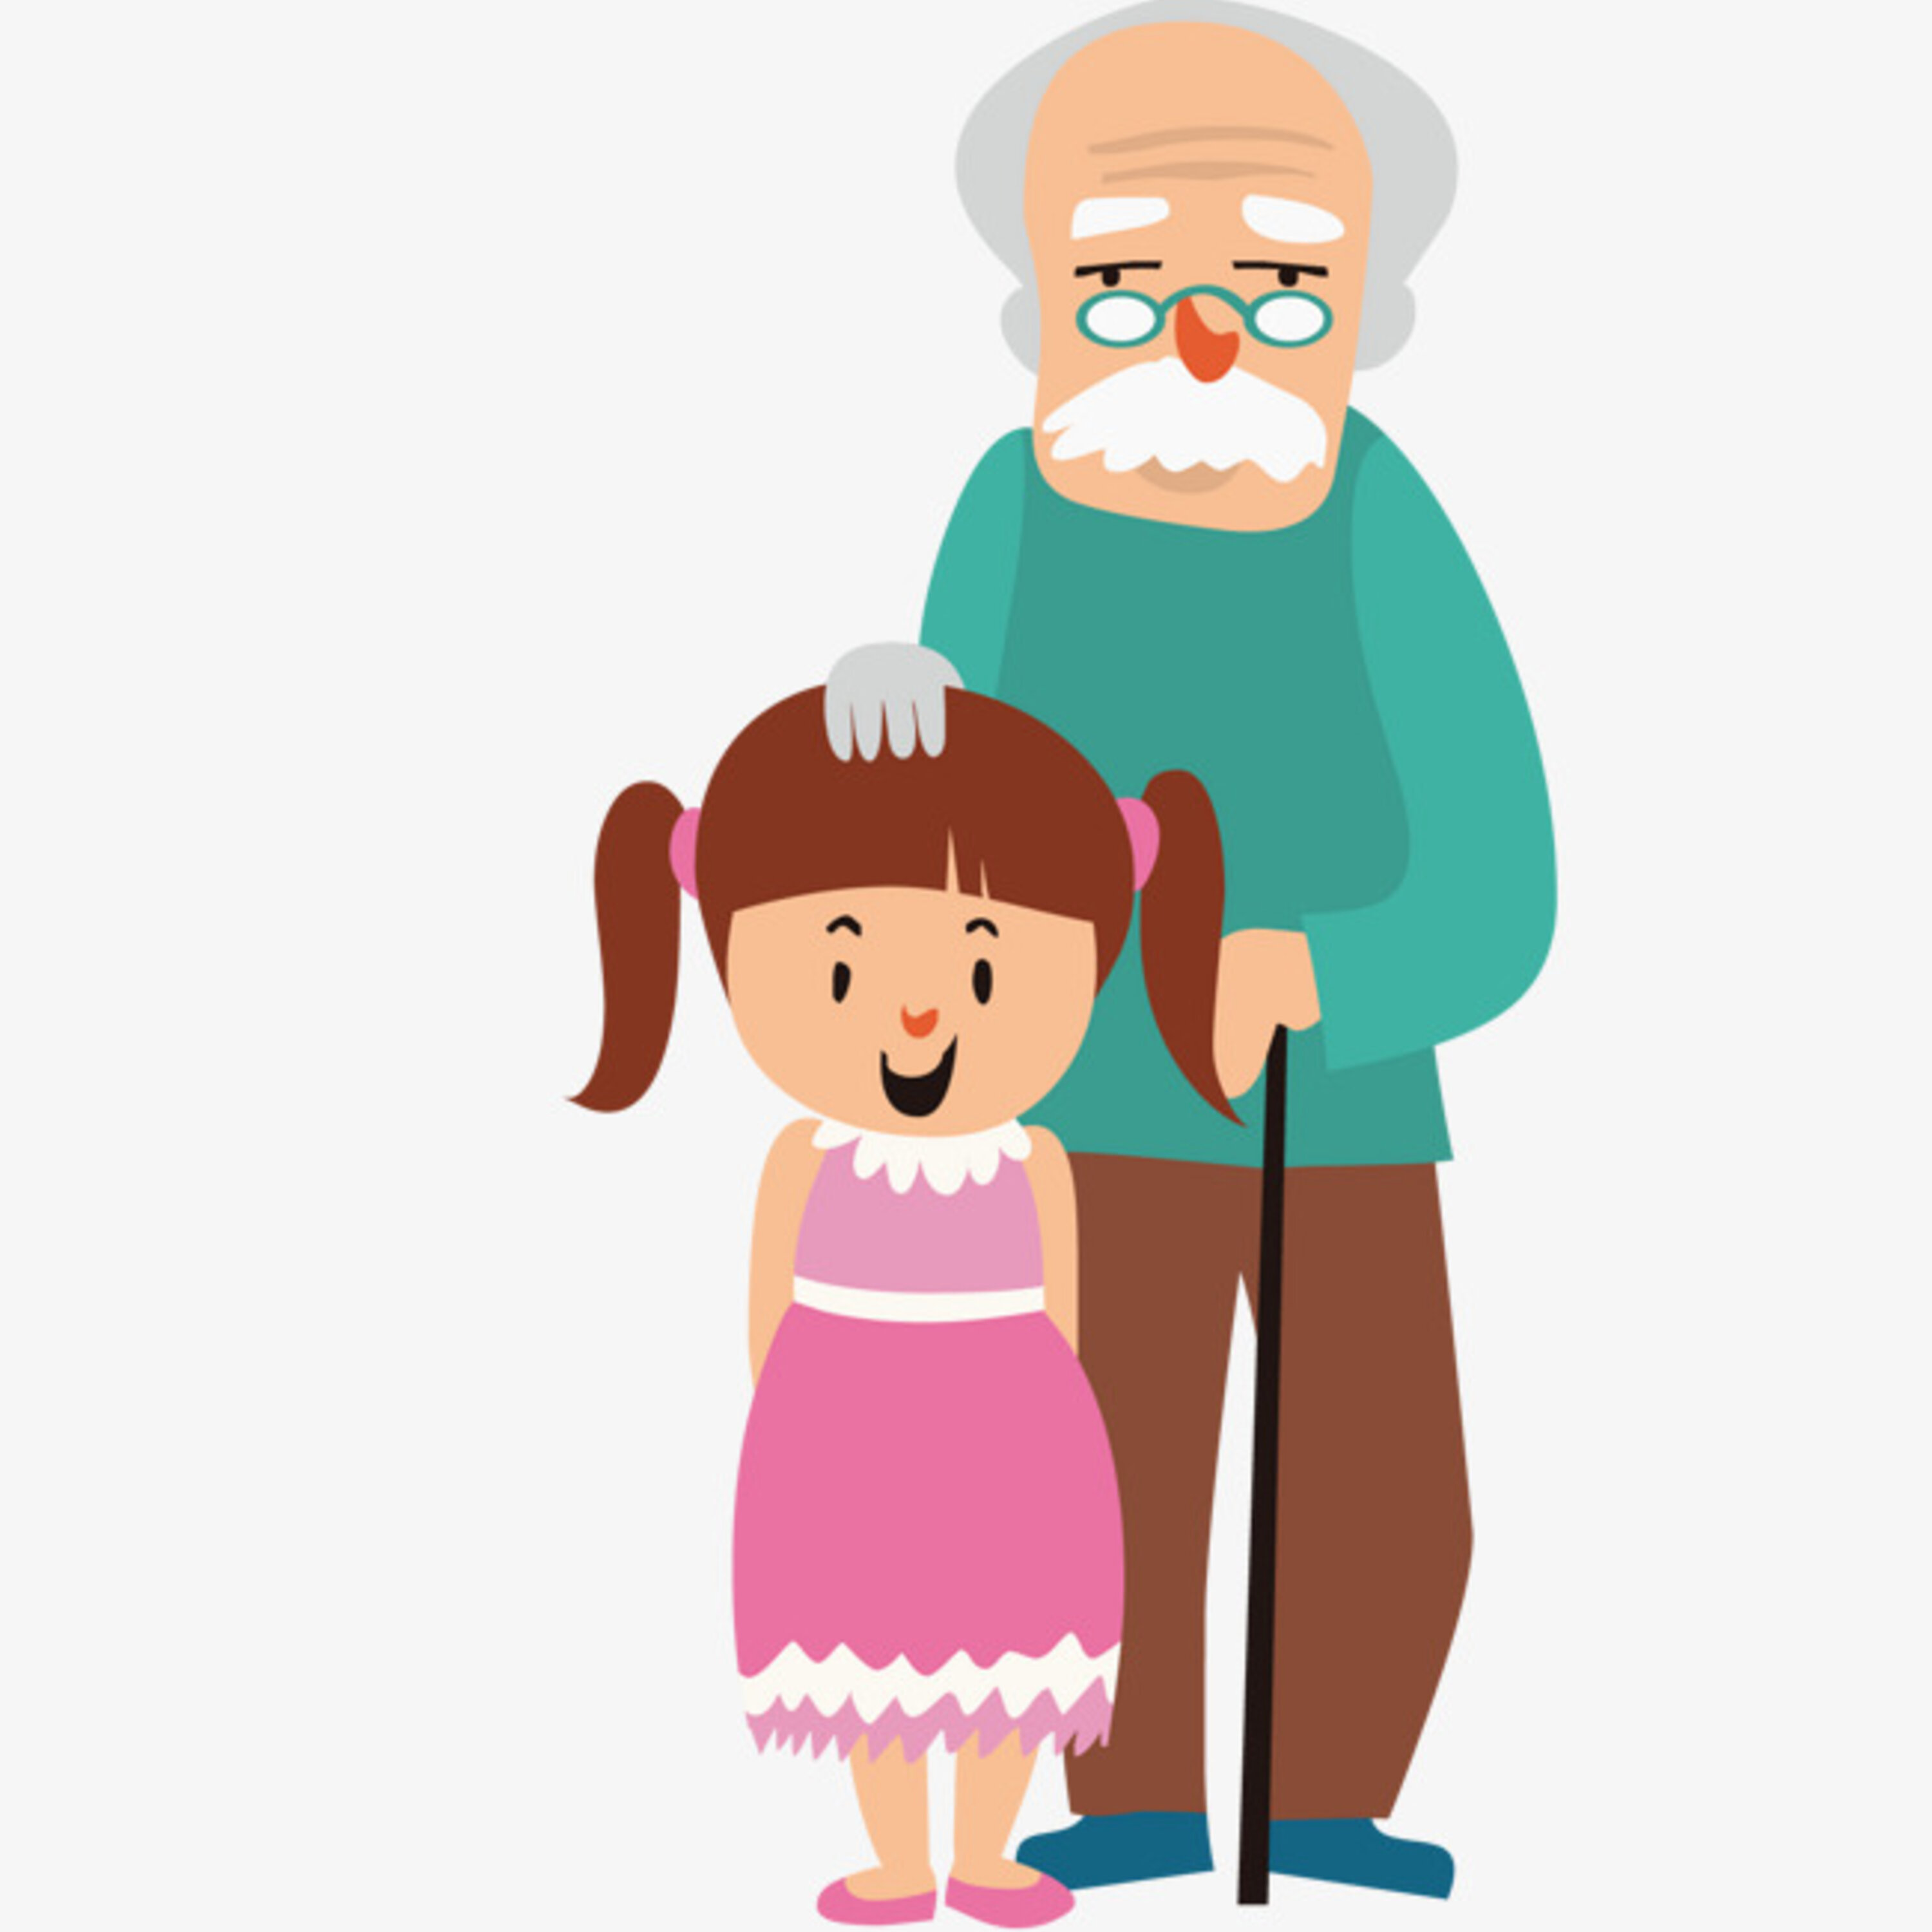 Картинка дедушка. Дедушка рисунок. Девочка с дедушкой. Детям о дедушке. Бабушка и дедушка рисунок.